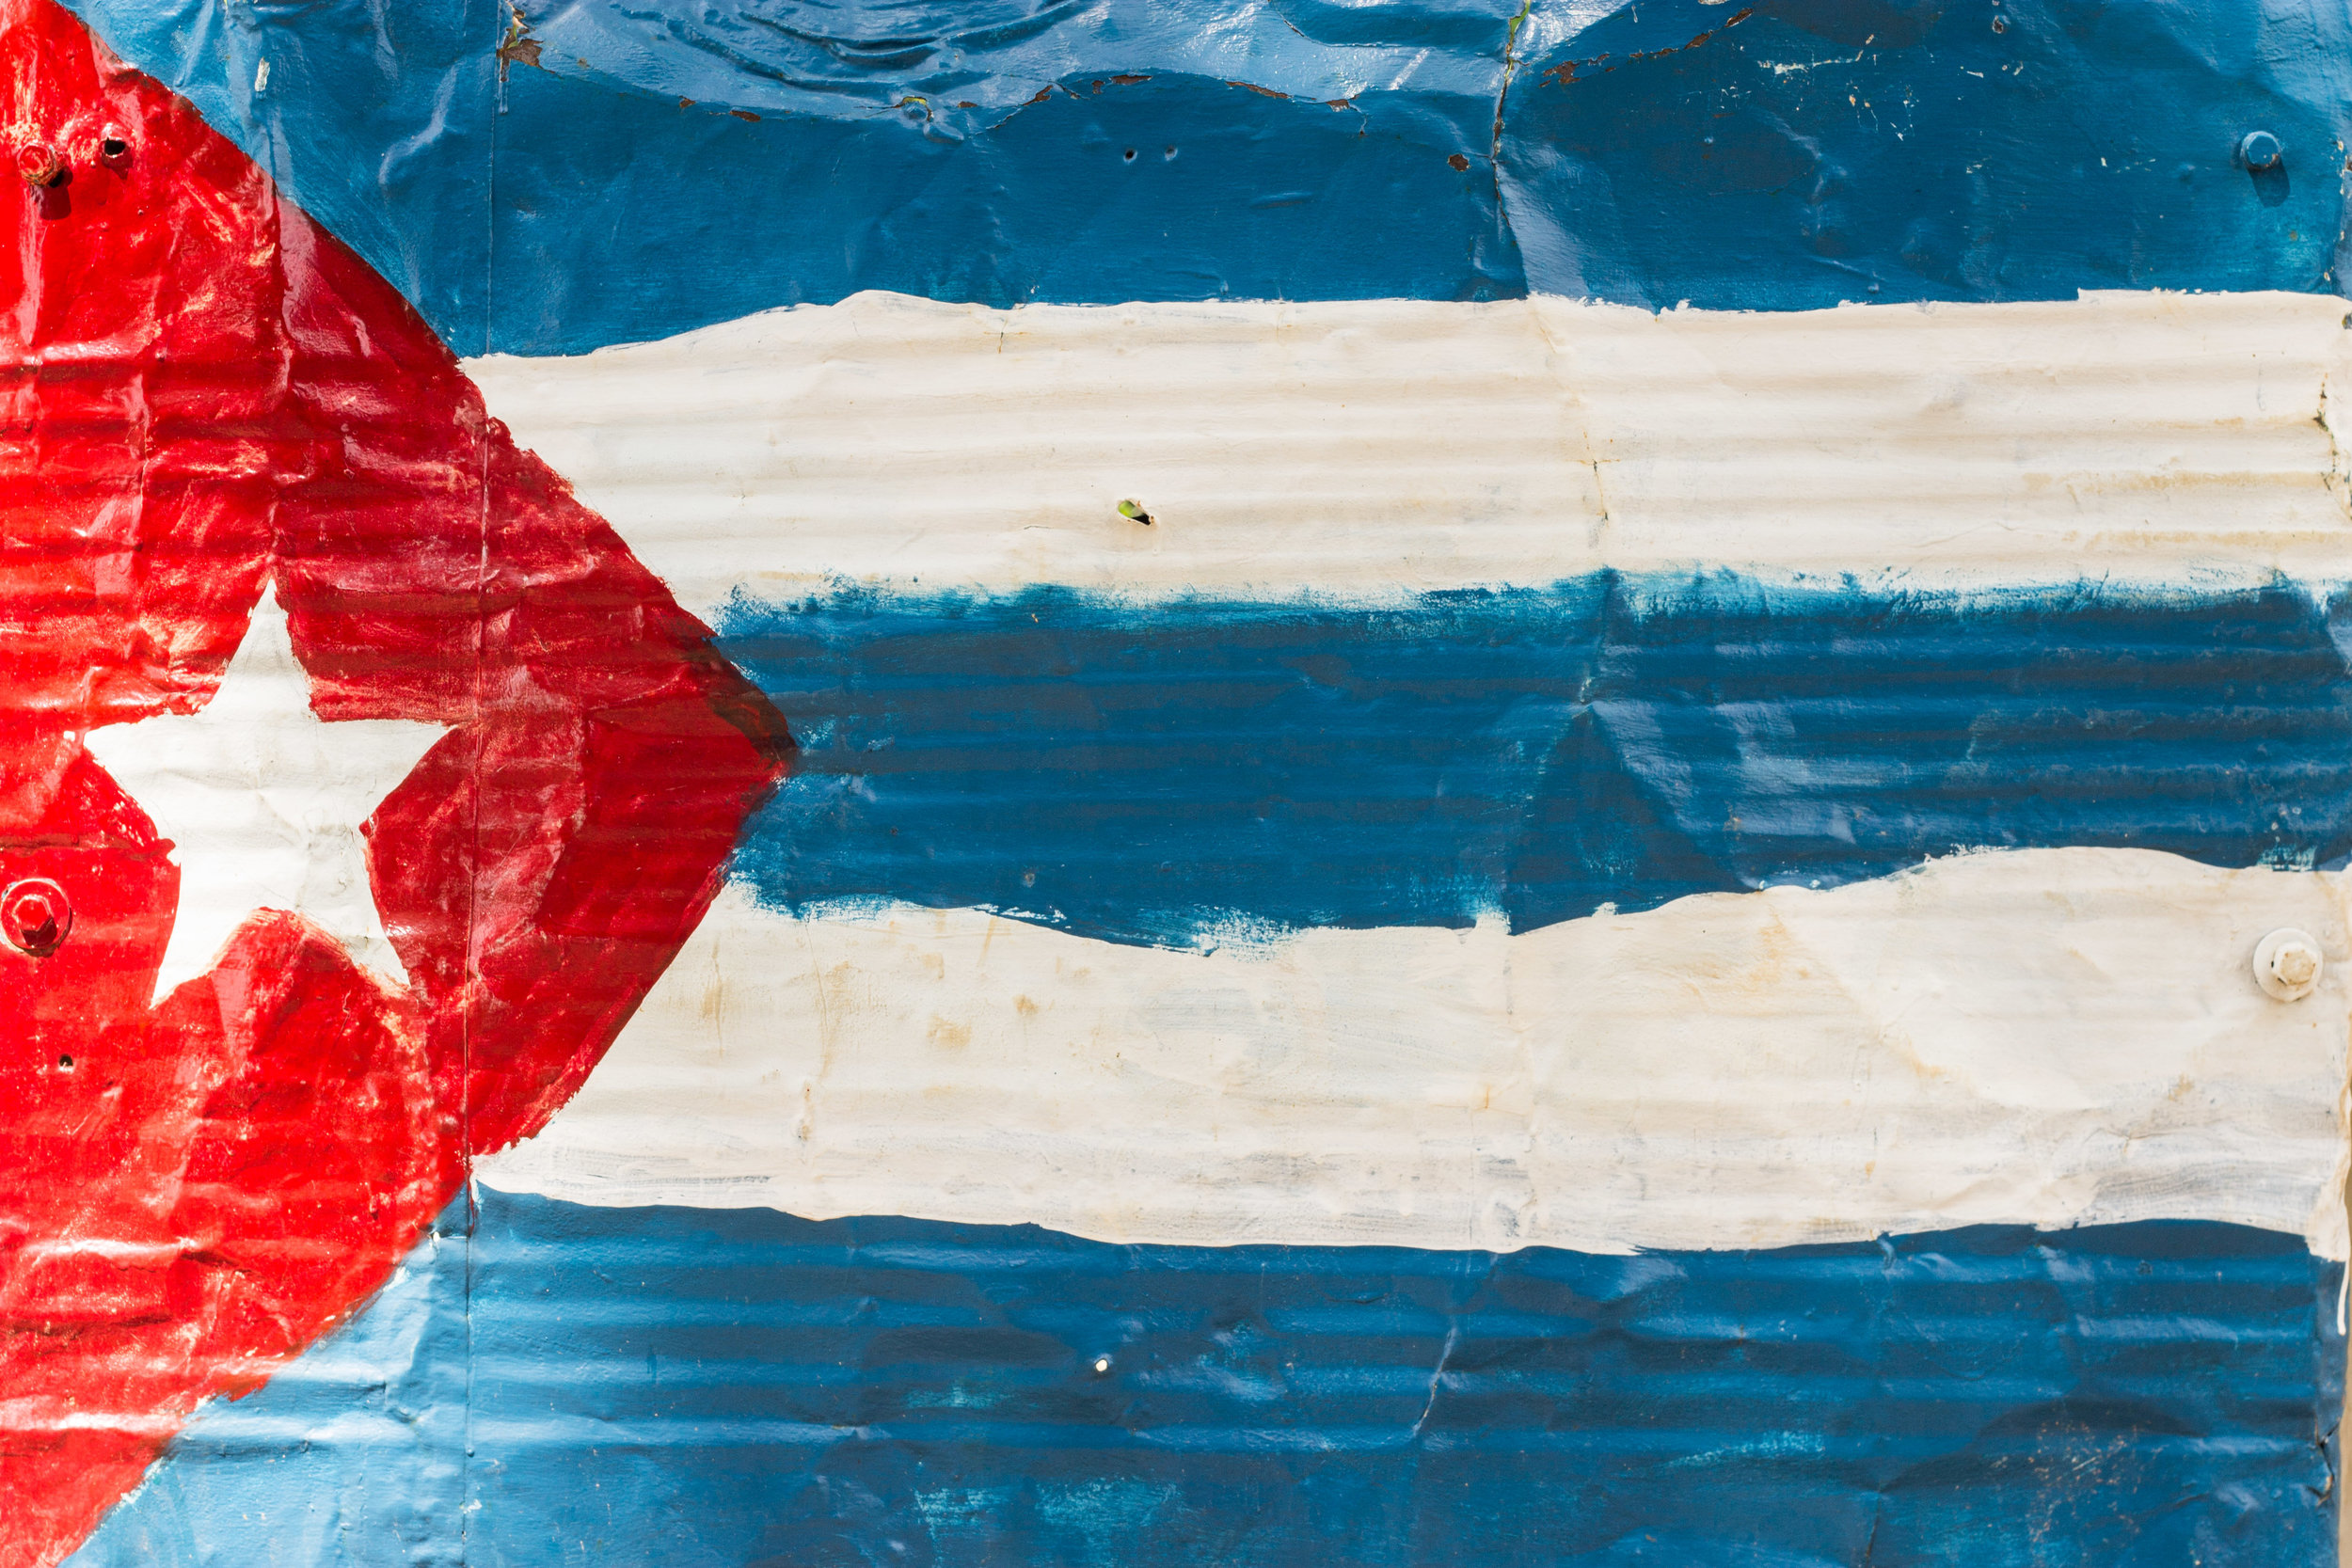 Cuba Travel Restrictions: 2019 Update